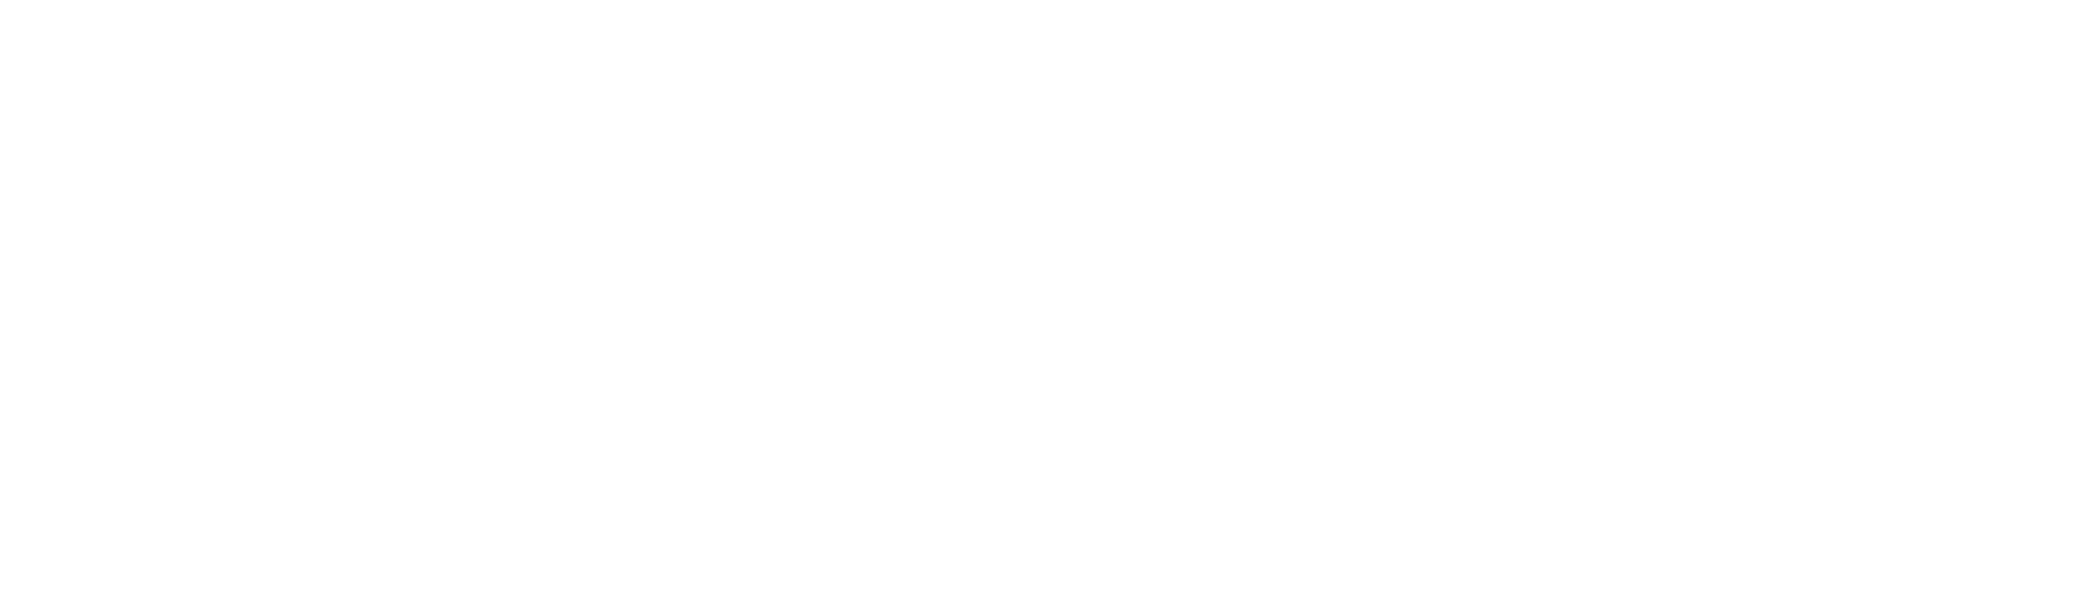 Optimal Happiness logo